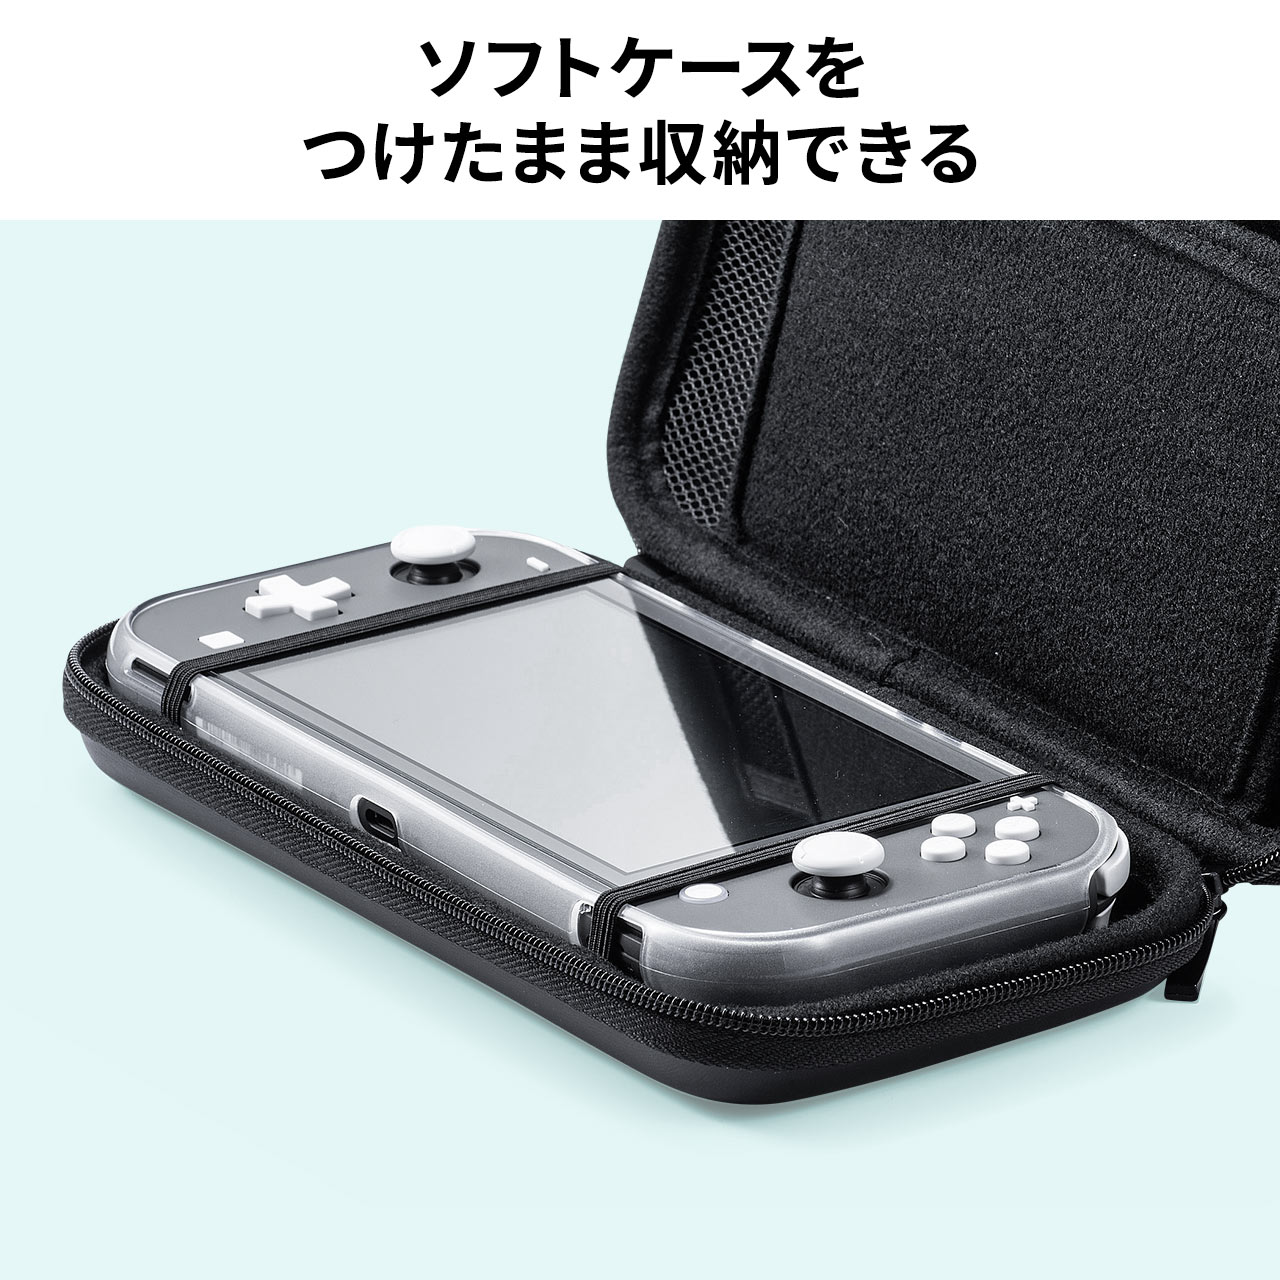 Nintendo Switch Lite専用セミハードケース+TPUソフトケースセット